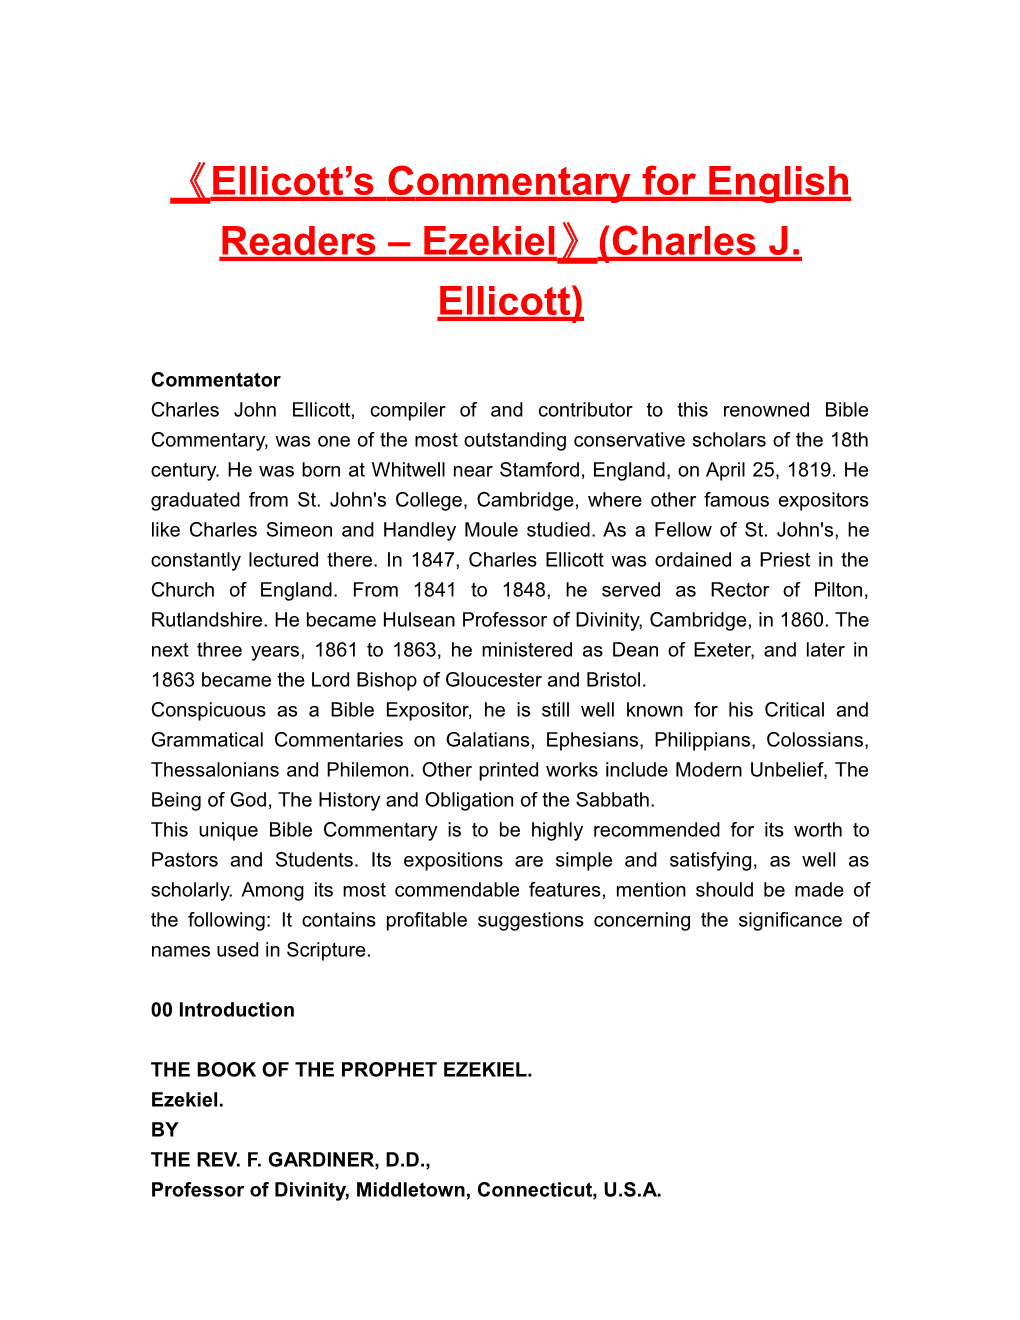 Ellicott Scommentary for English Readers Ezekiel (Charles J. Ellicott)